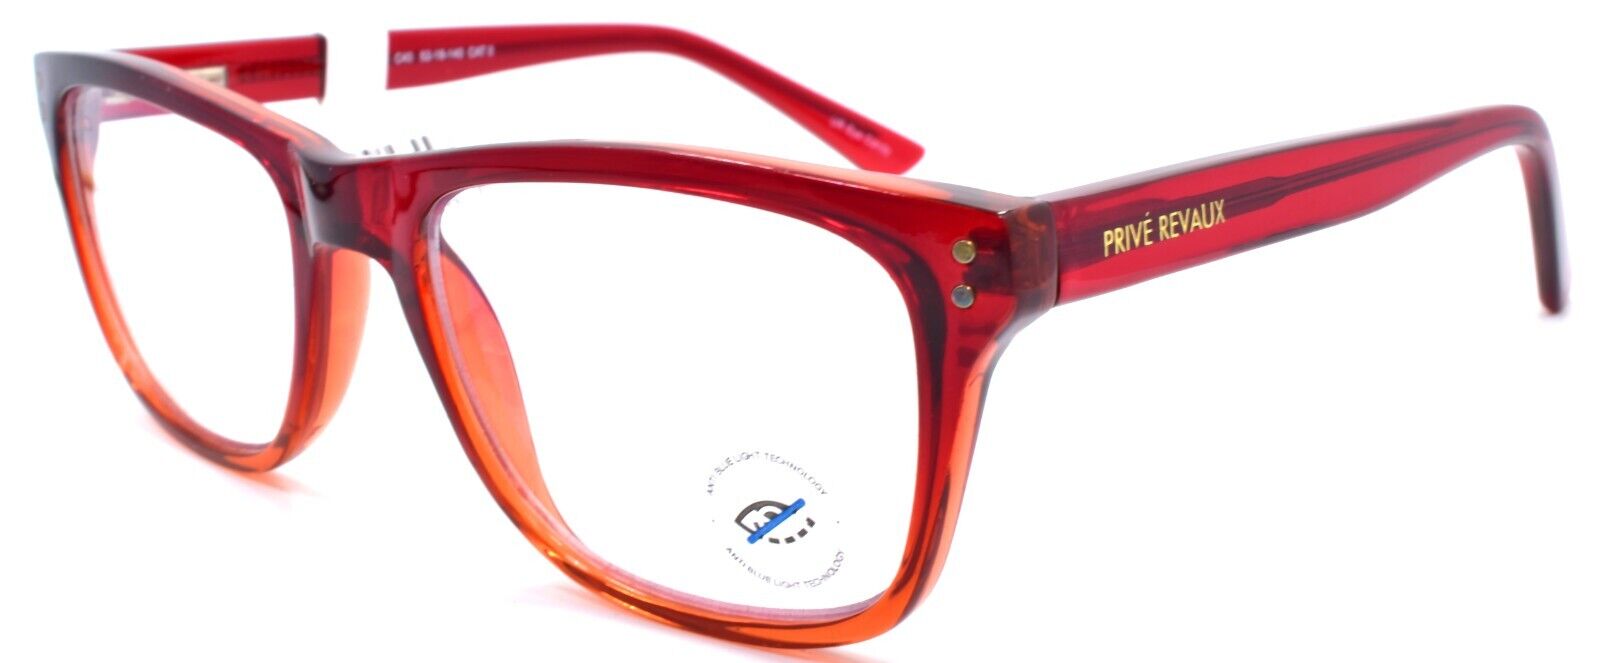 1-Prive Revaux Good Looker Eyeglasses Blue Light Blocking RX-ready Red Gradient-810036108997-IKSpecs